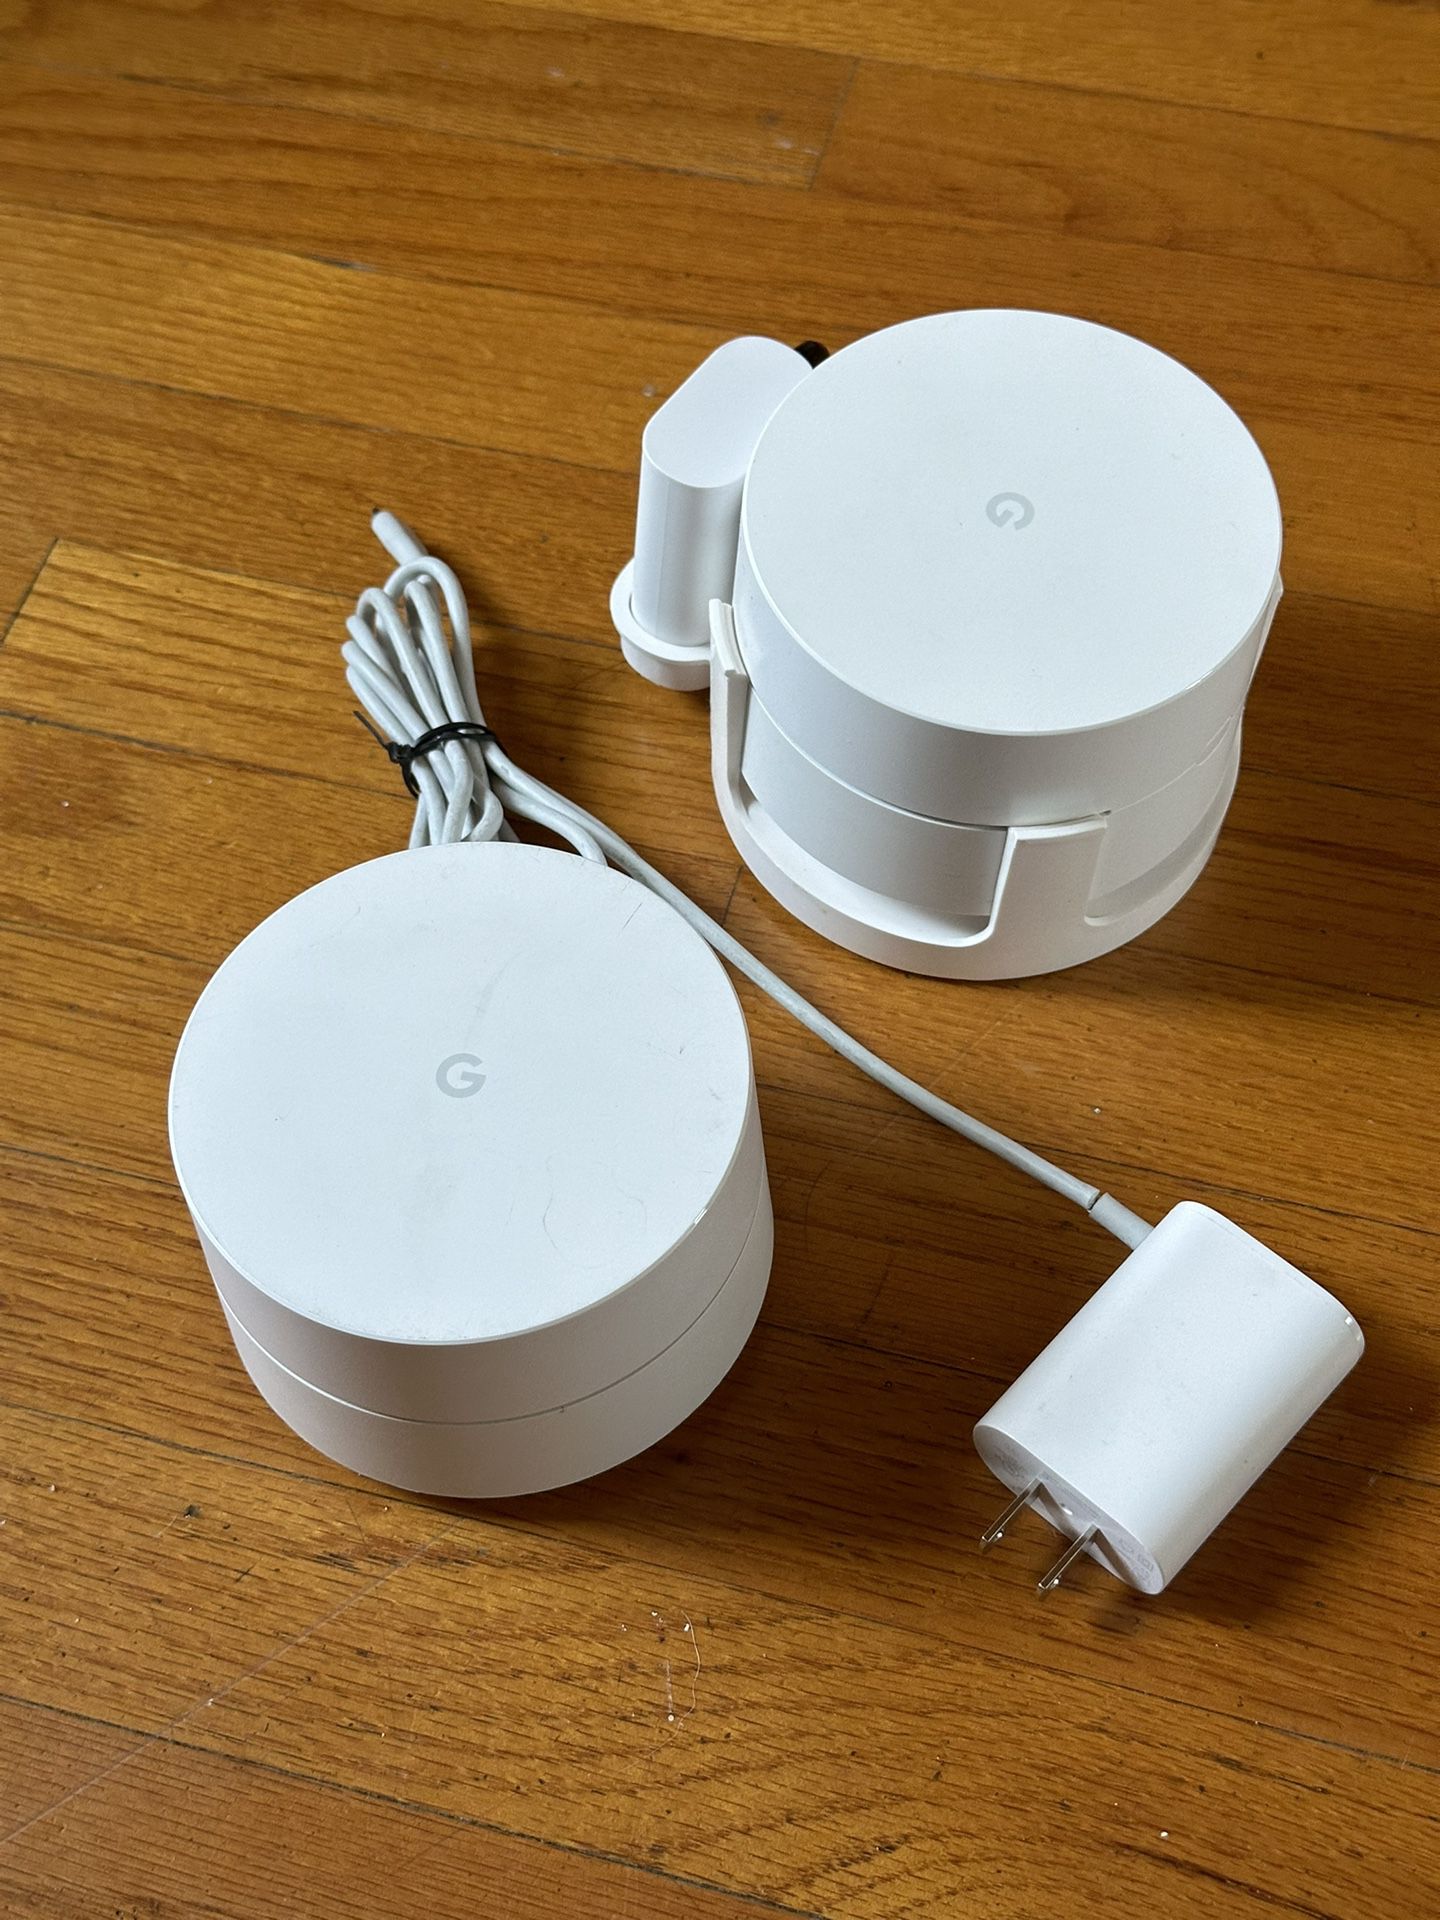 2 Google WiFi Wireless Routers